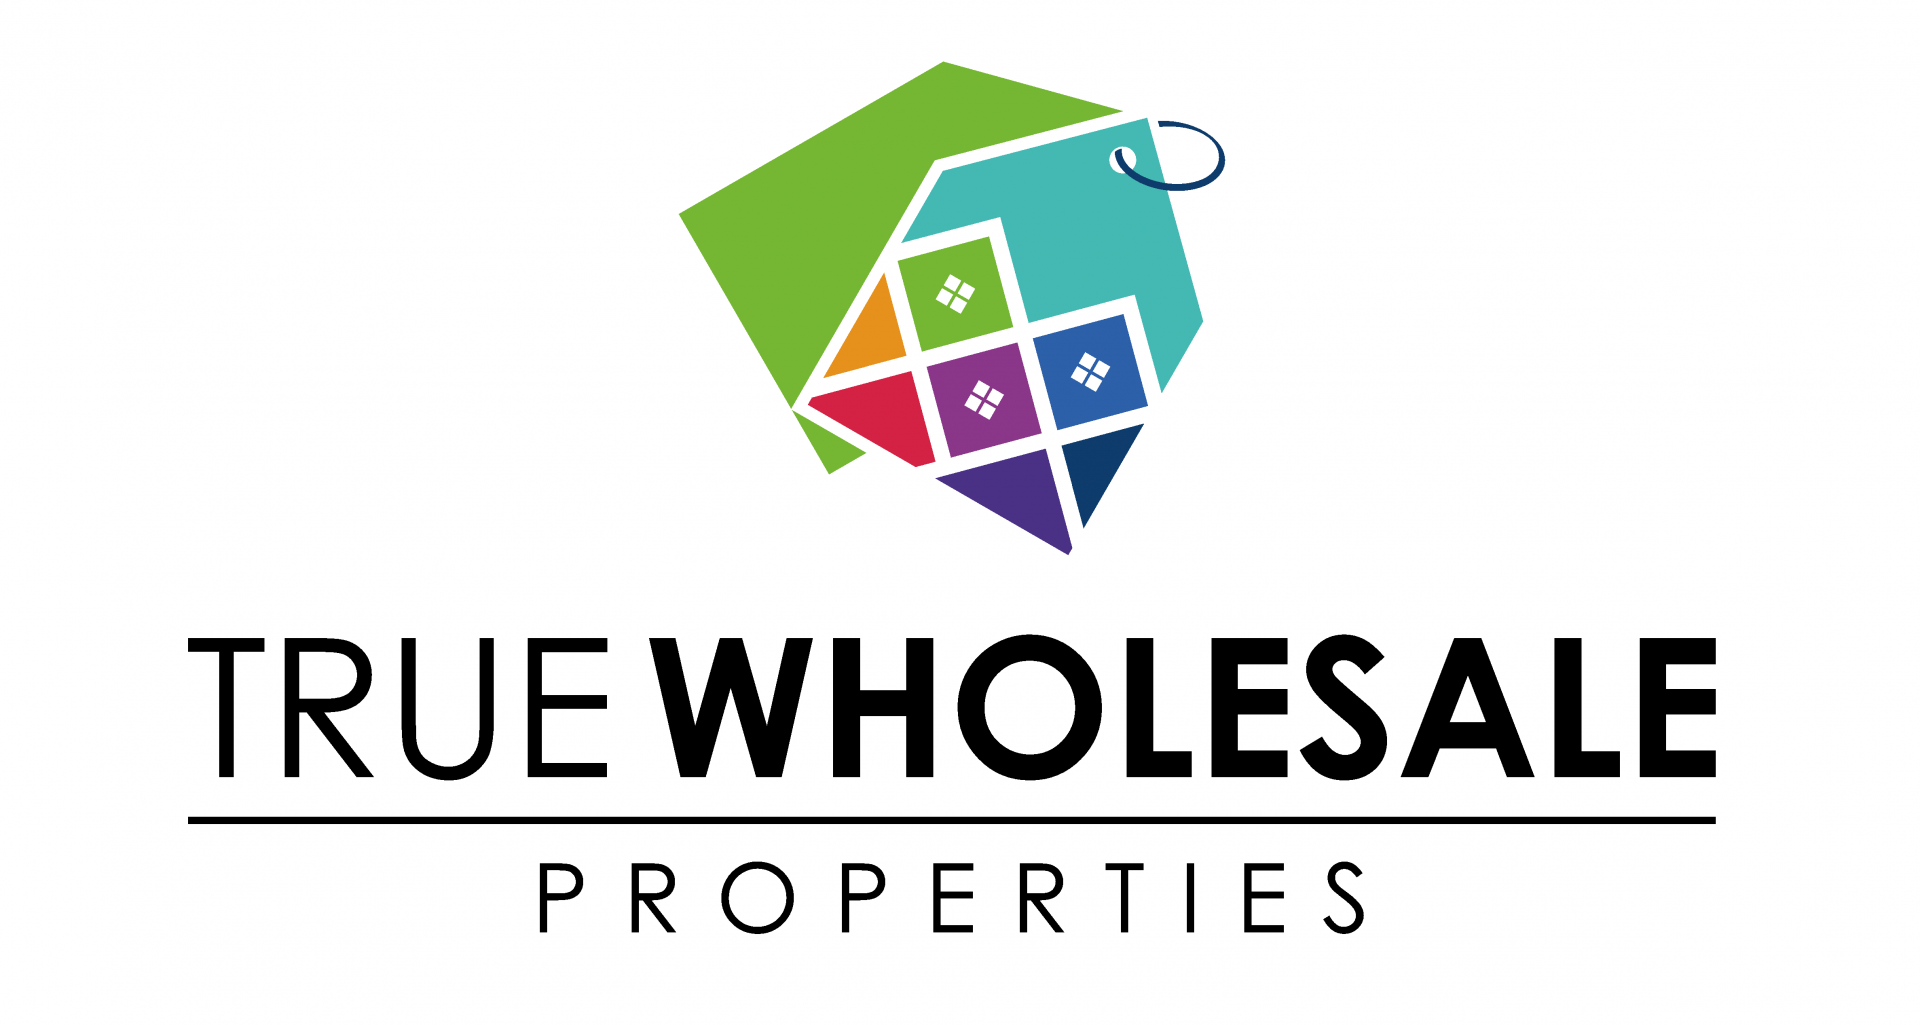 True Wholesale Properties logo